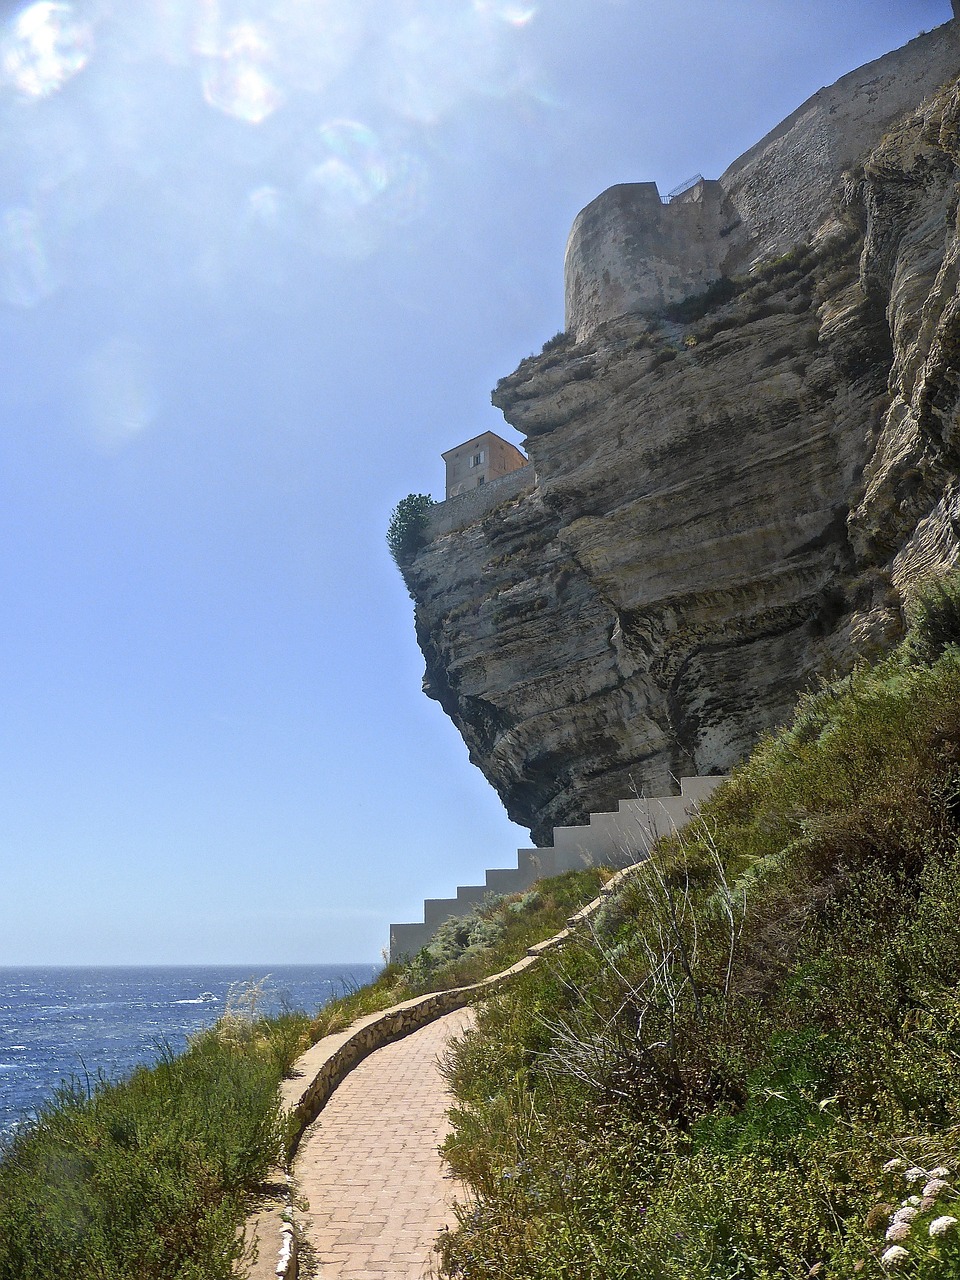 bonifacio cliffs overhang free photo